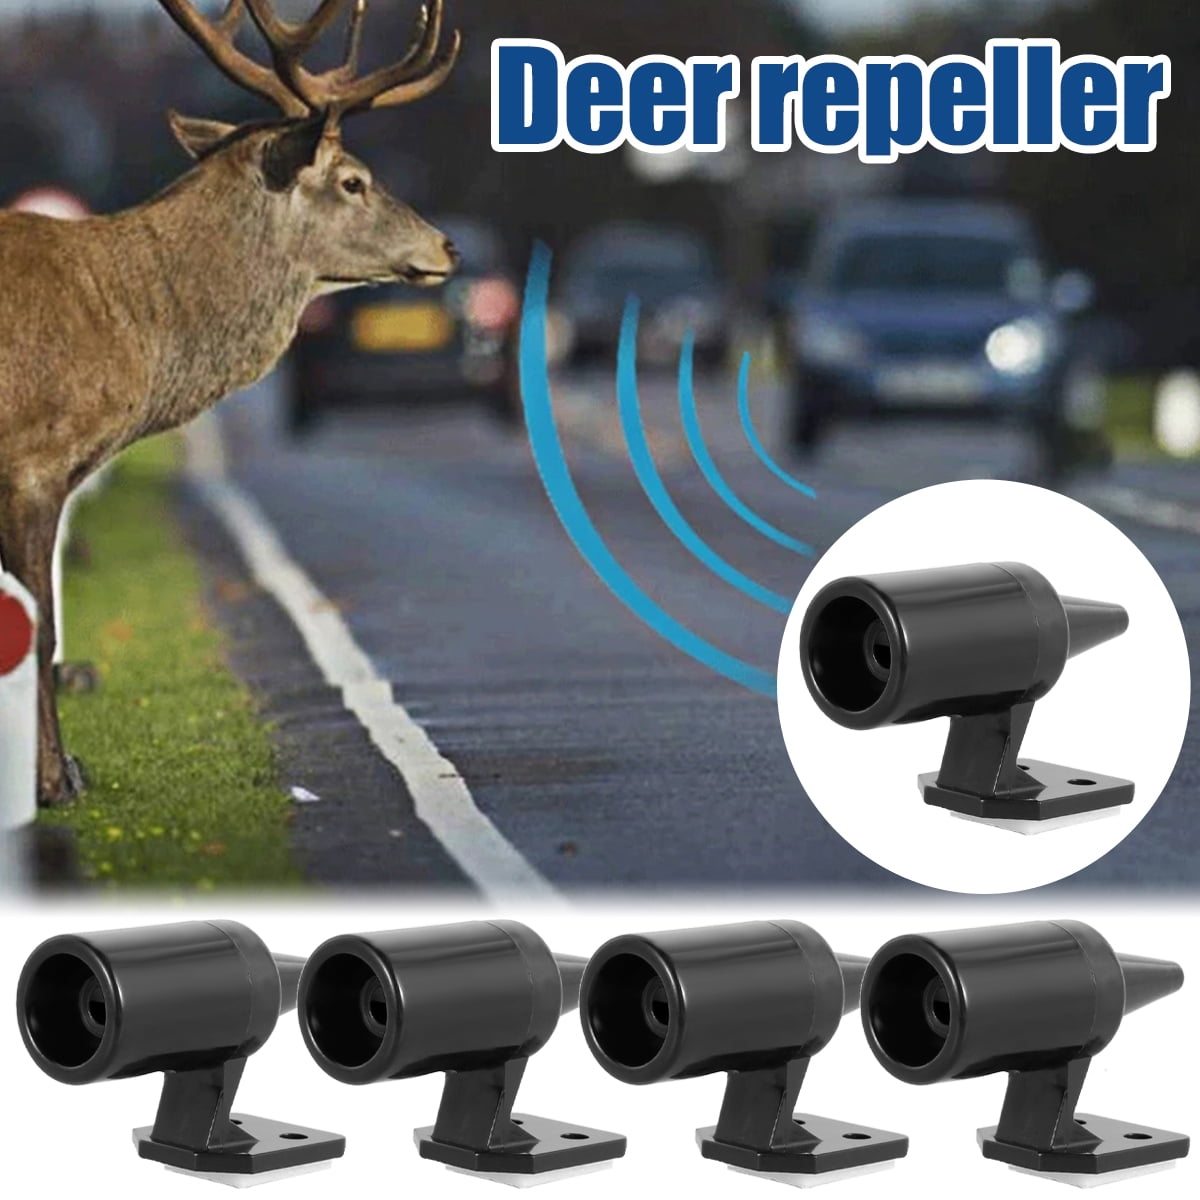 2pcs Ultrasonic Car Deer Animal Alert Warning Whistles Safety Sound Alarm  Black Hfmqv